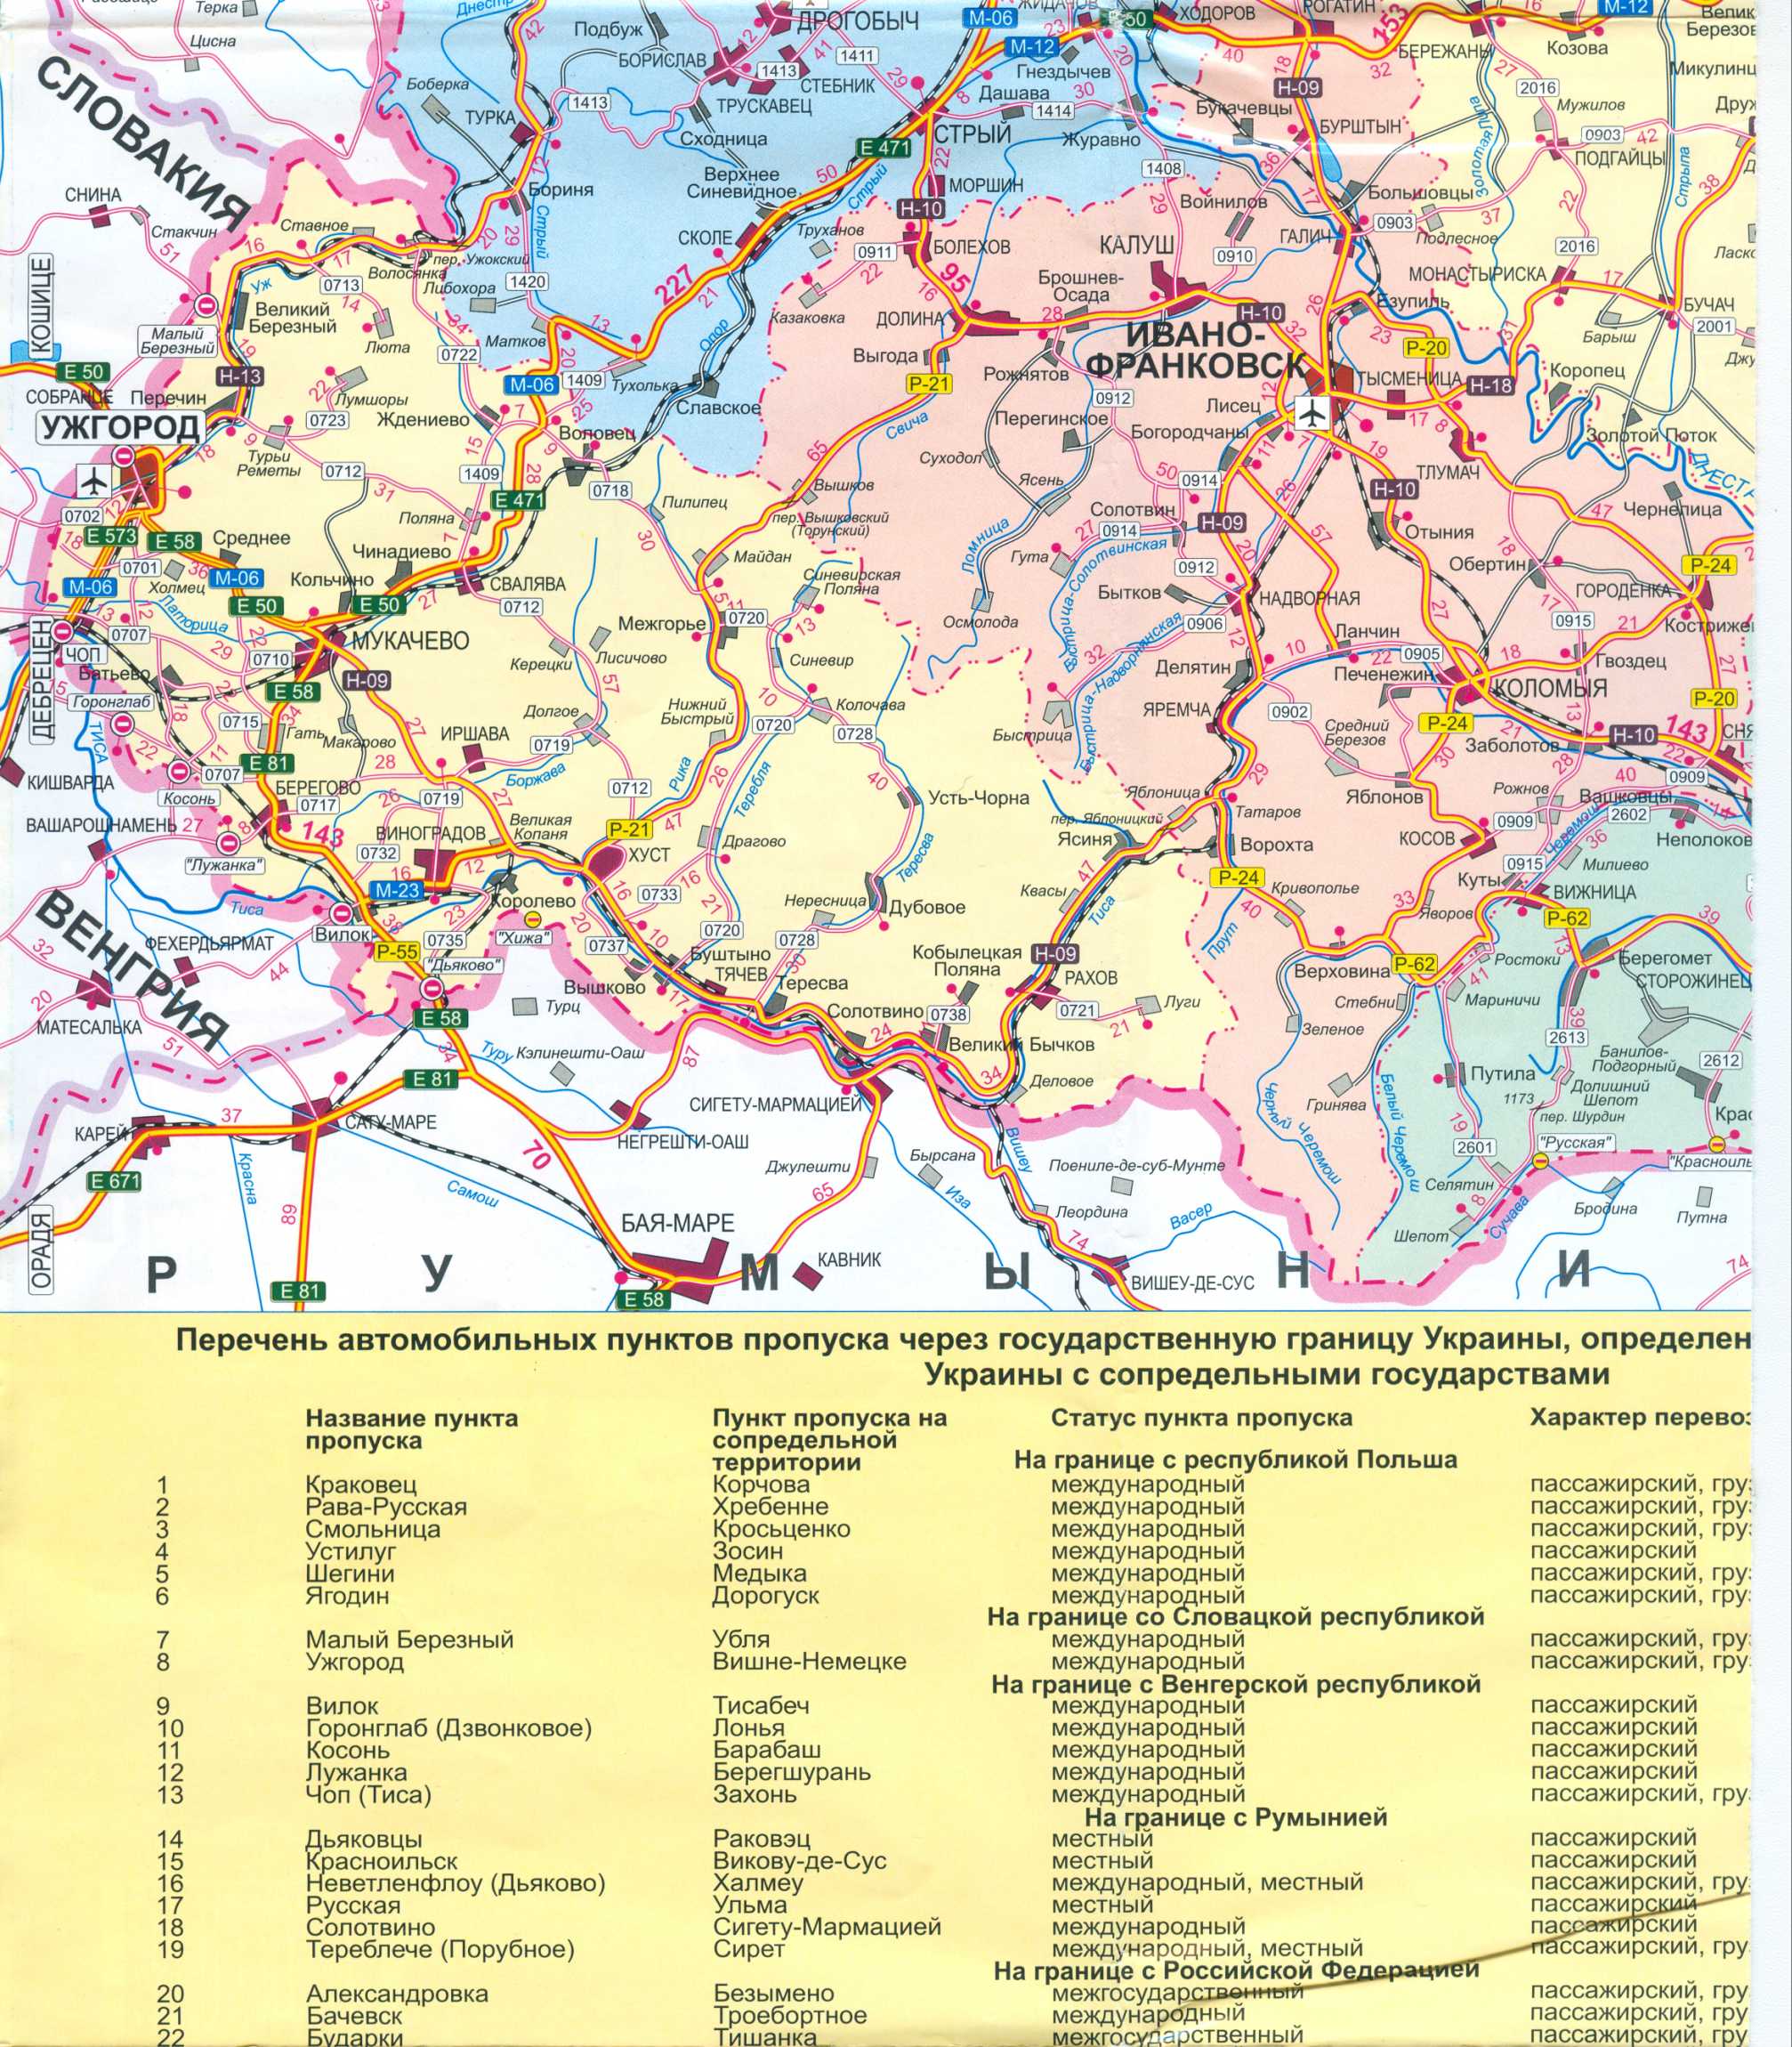 Map of Ukraine free. Road Map of Ukraine download free. Big Map of Ukraine roads free, A1